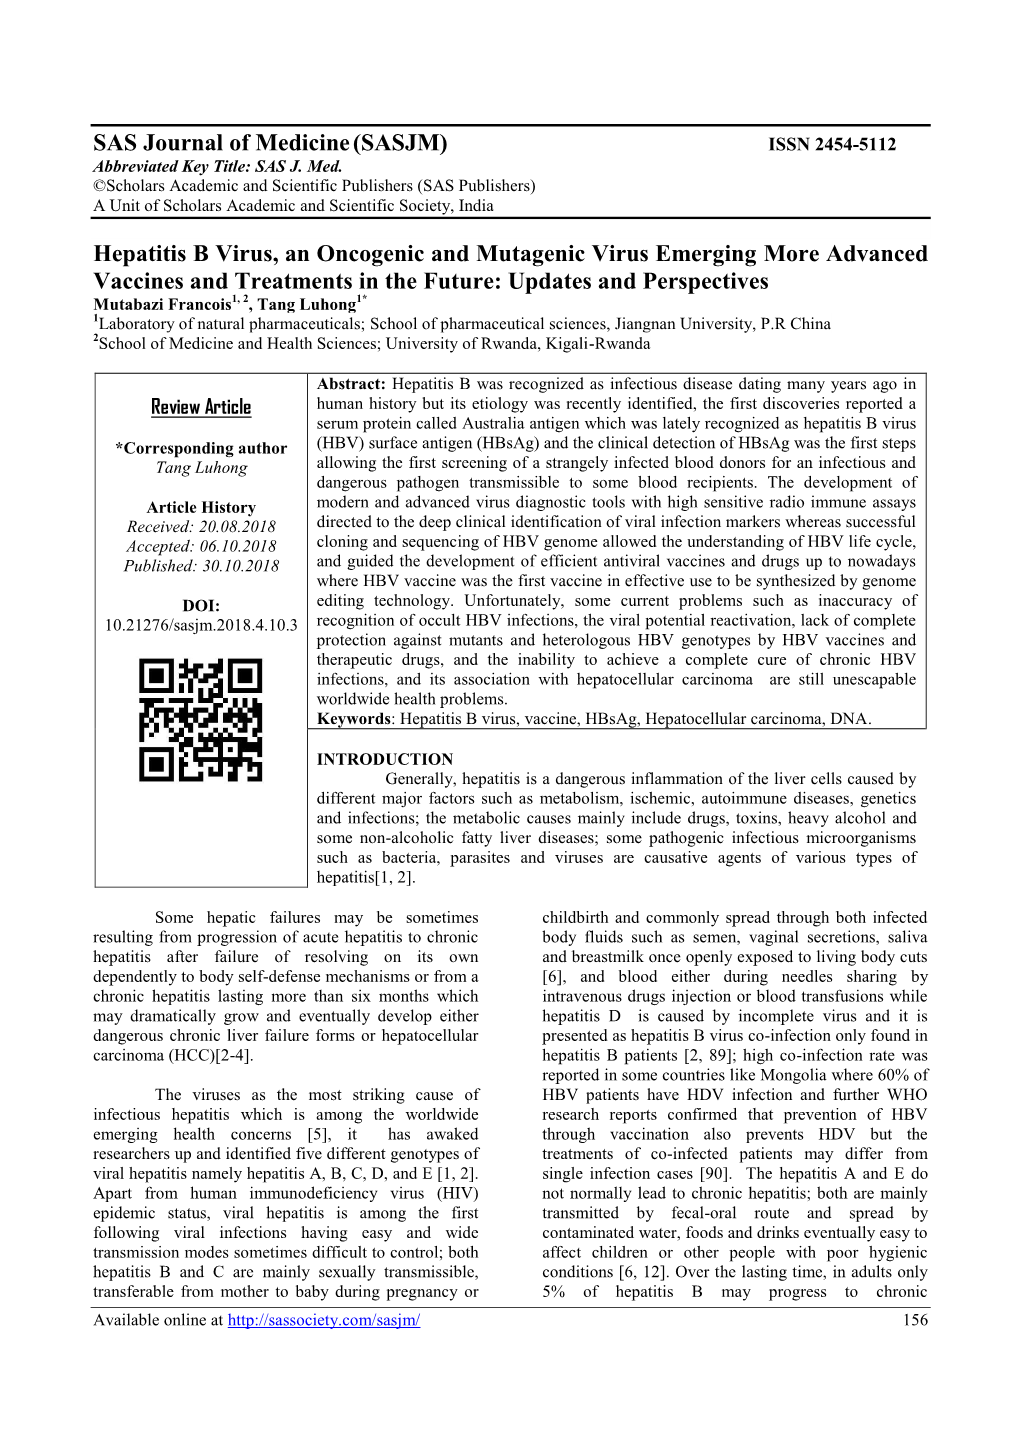 SAS Journal of Medicine (SASJM) Hepatitis B Virus, an Oncogenic